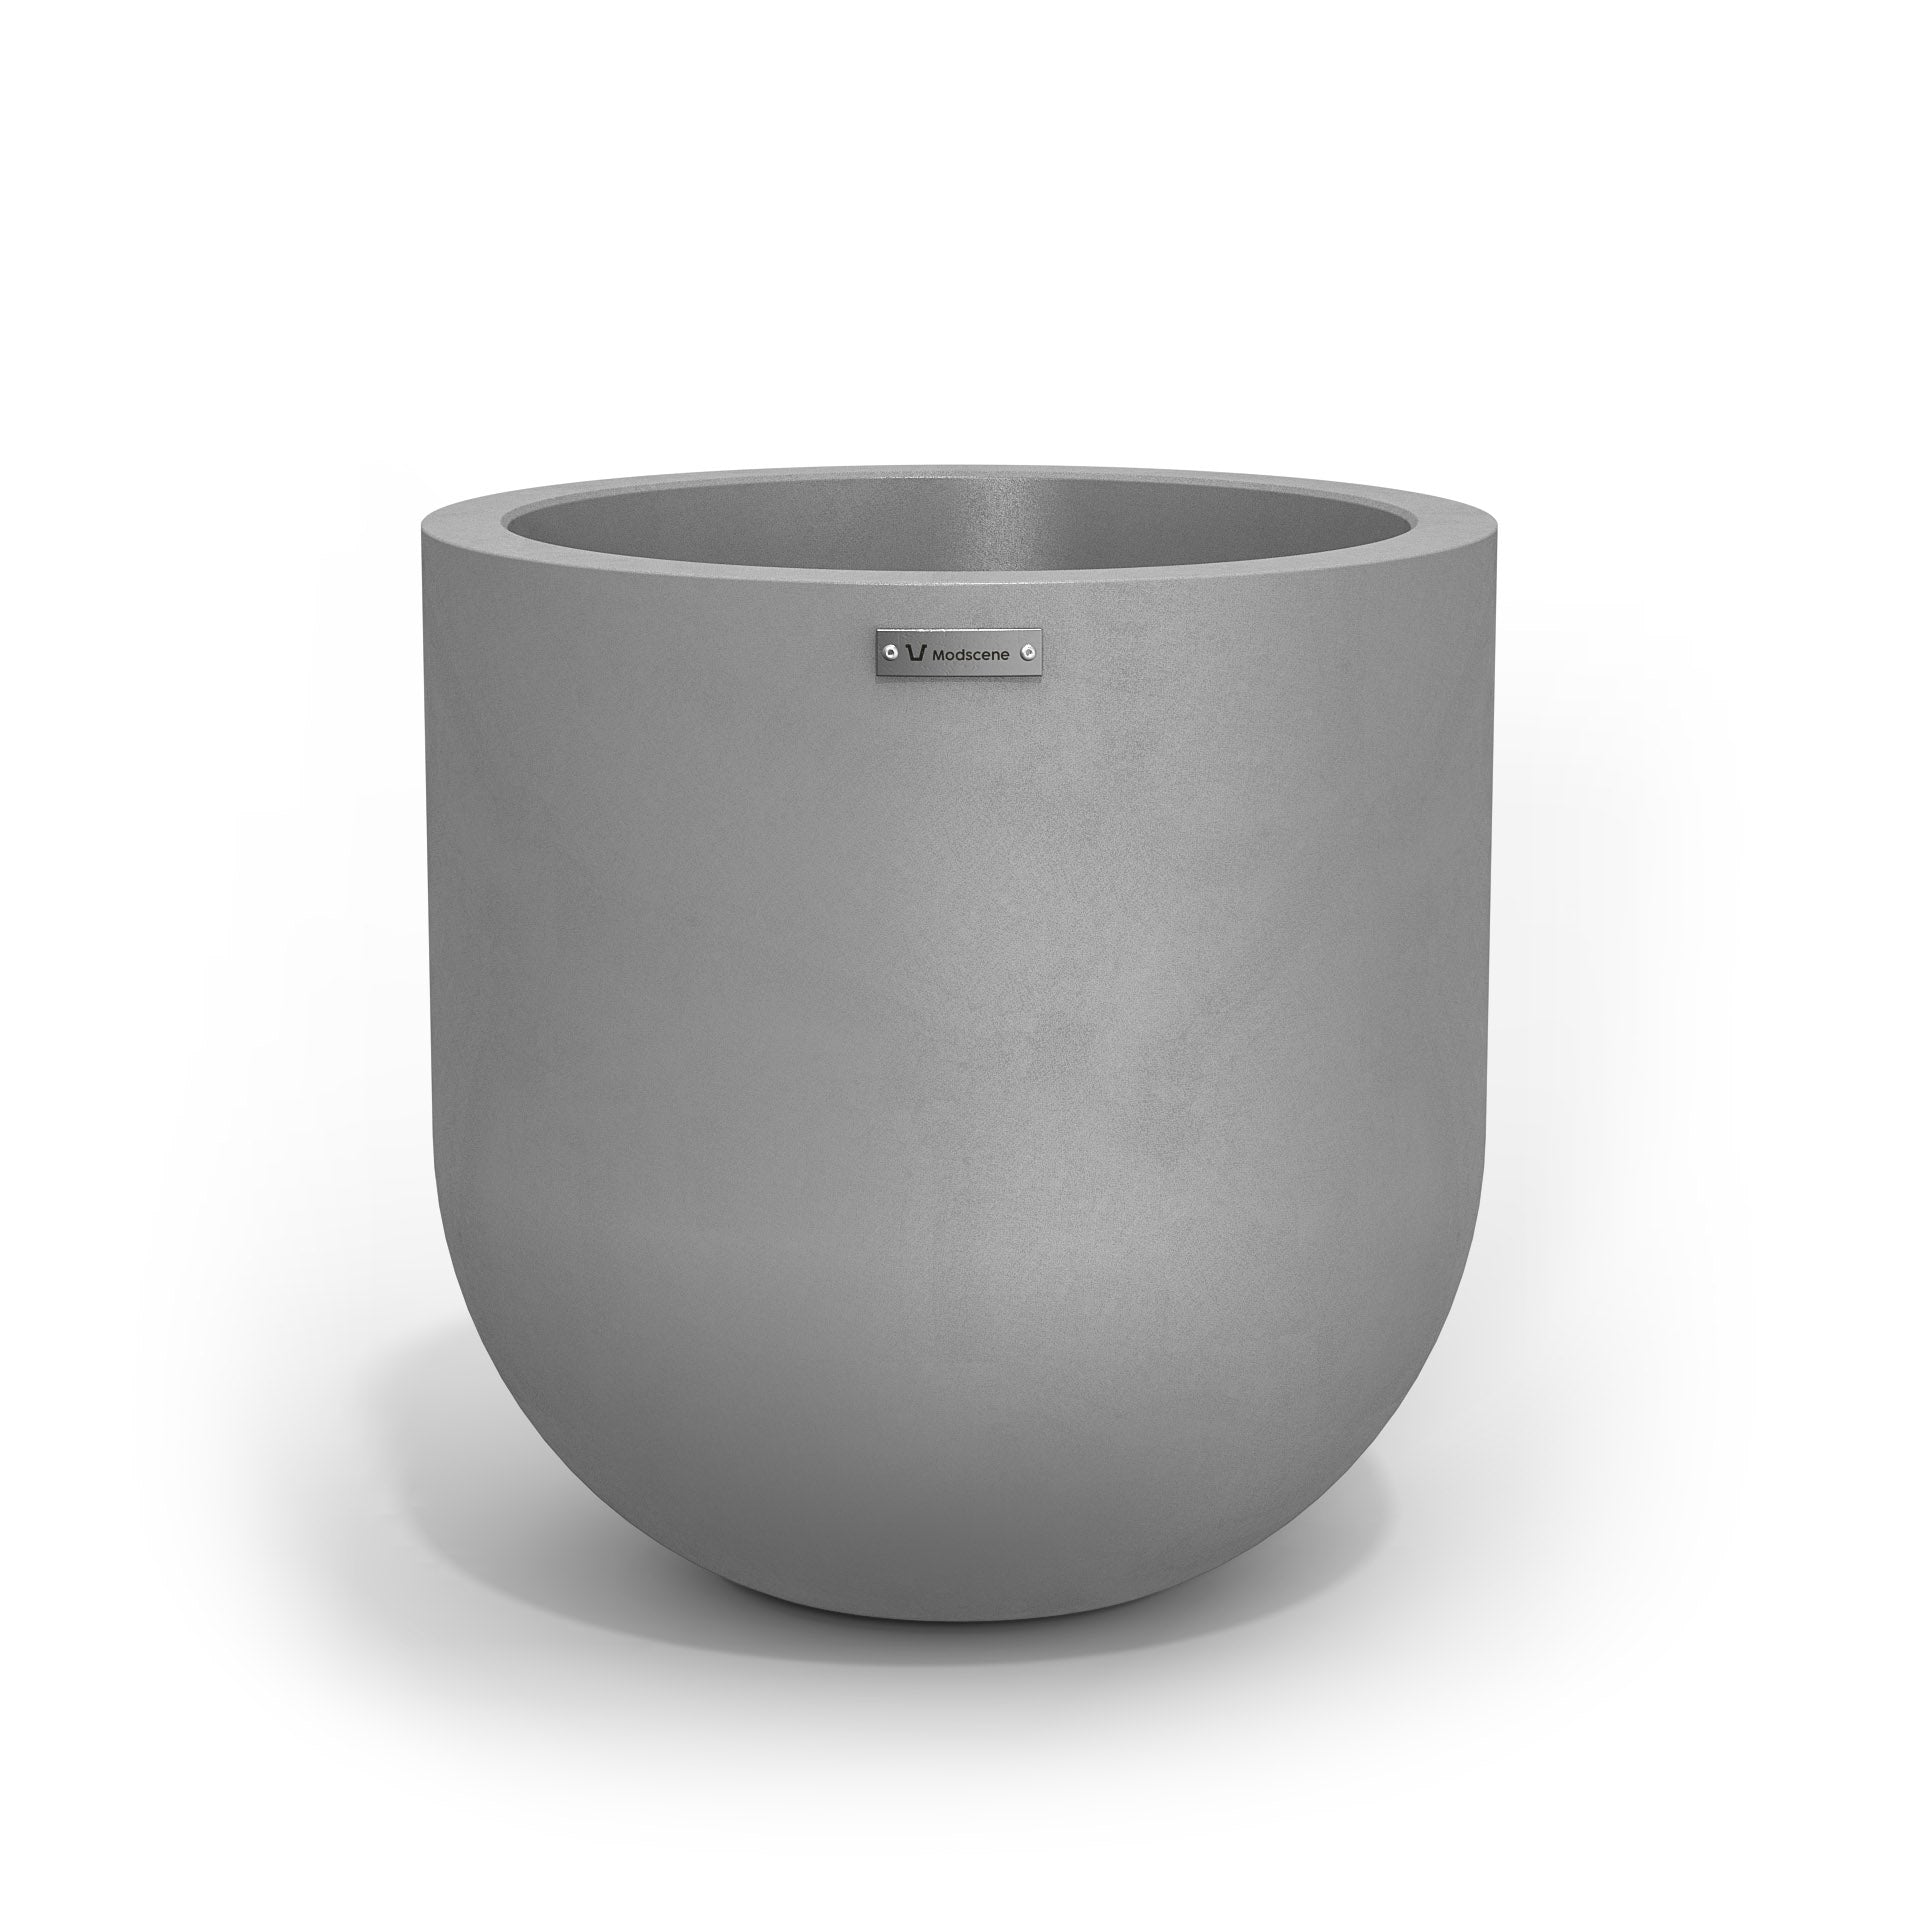 Medium Modscene planter pot in a light grey colour with a concrete finish.